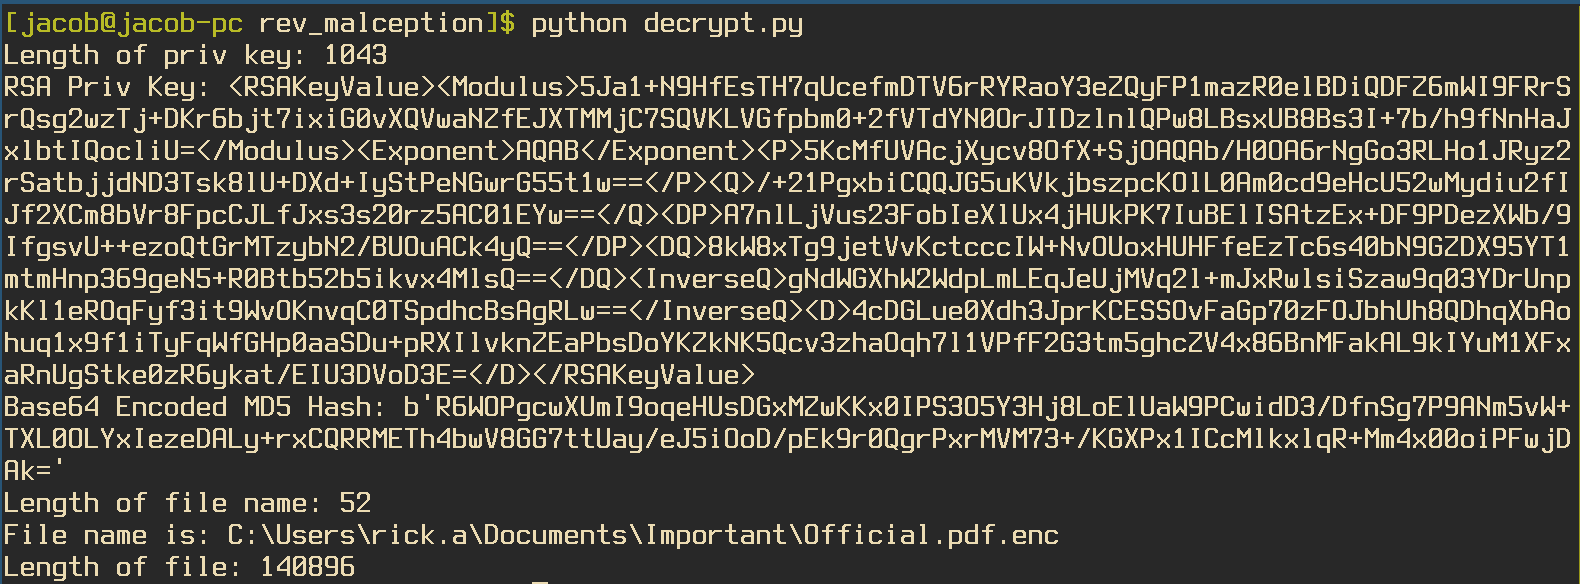 Verifying python script works